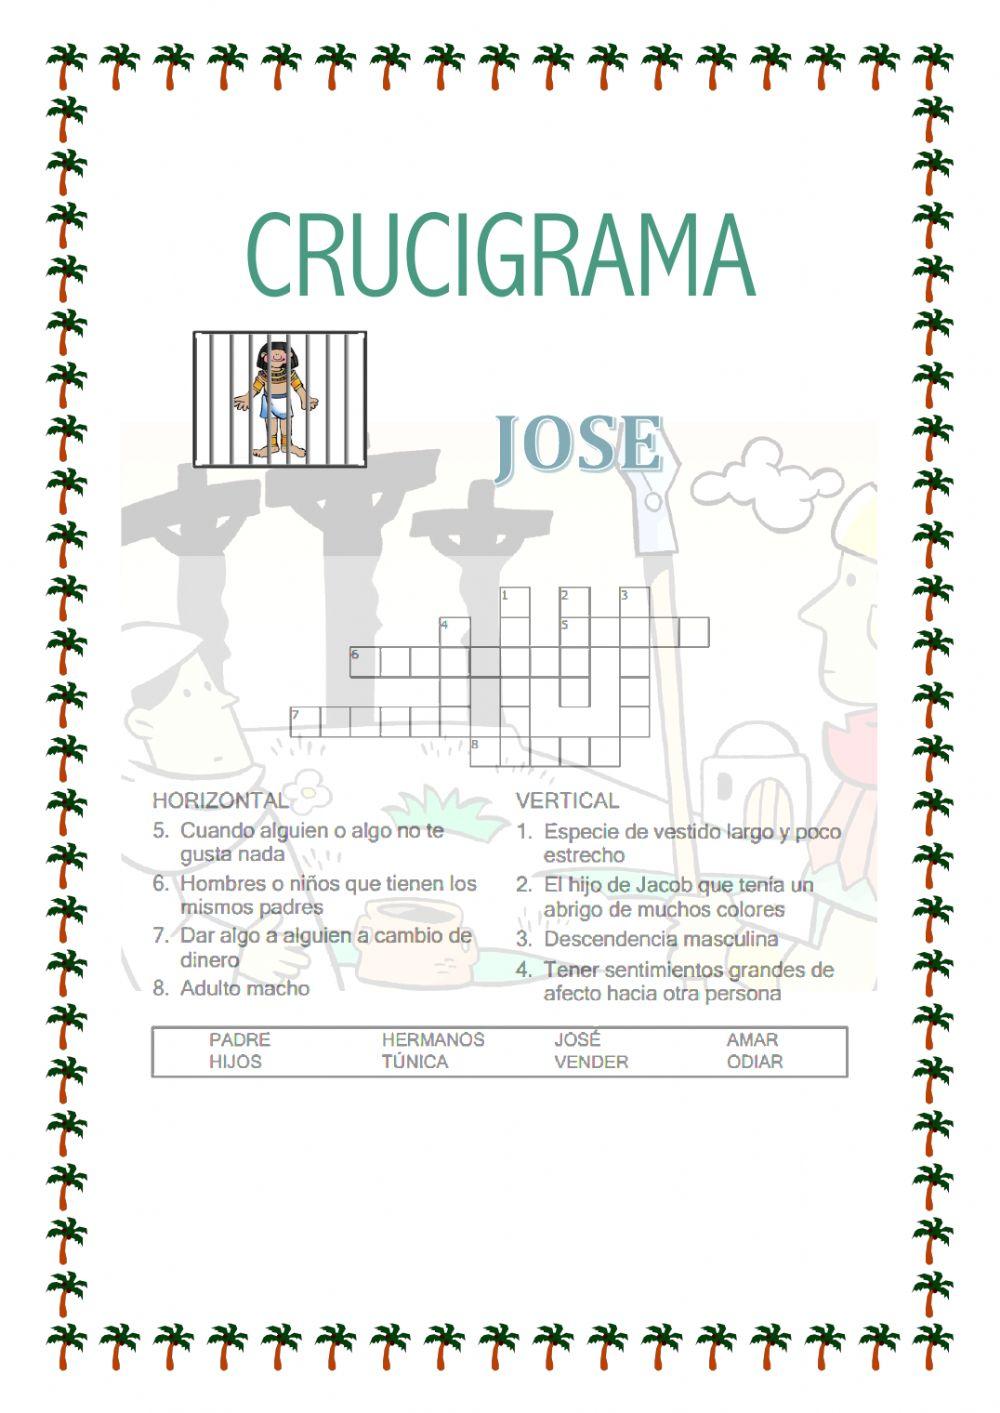 Jose crucigrama